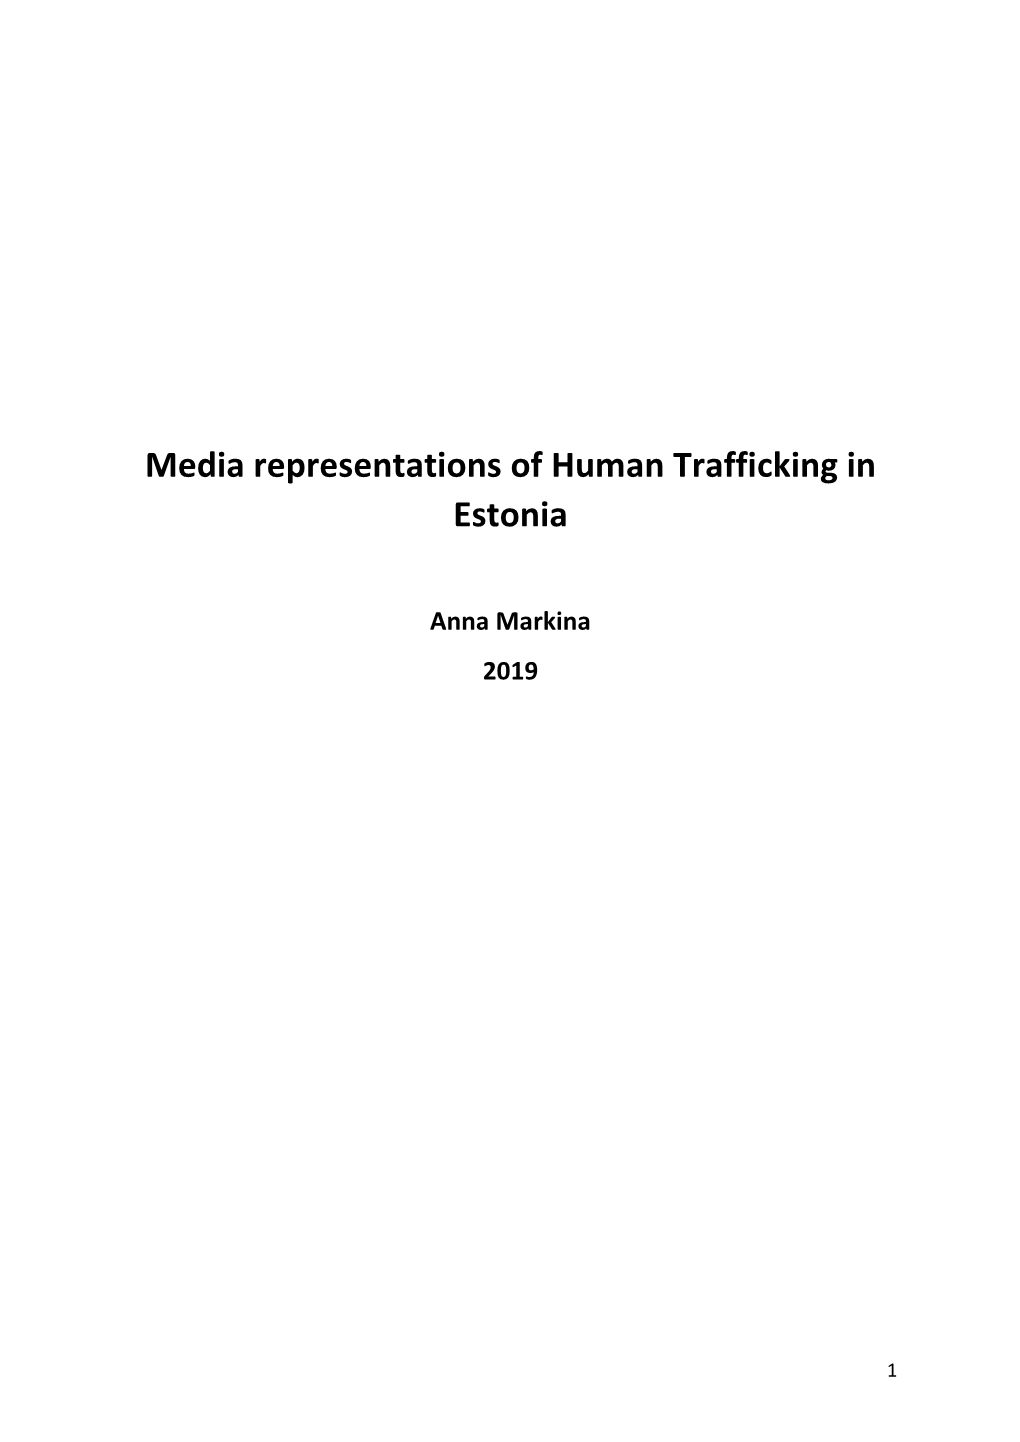 Media Representations of Human Trafficking in Estonia